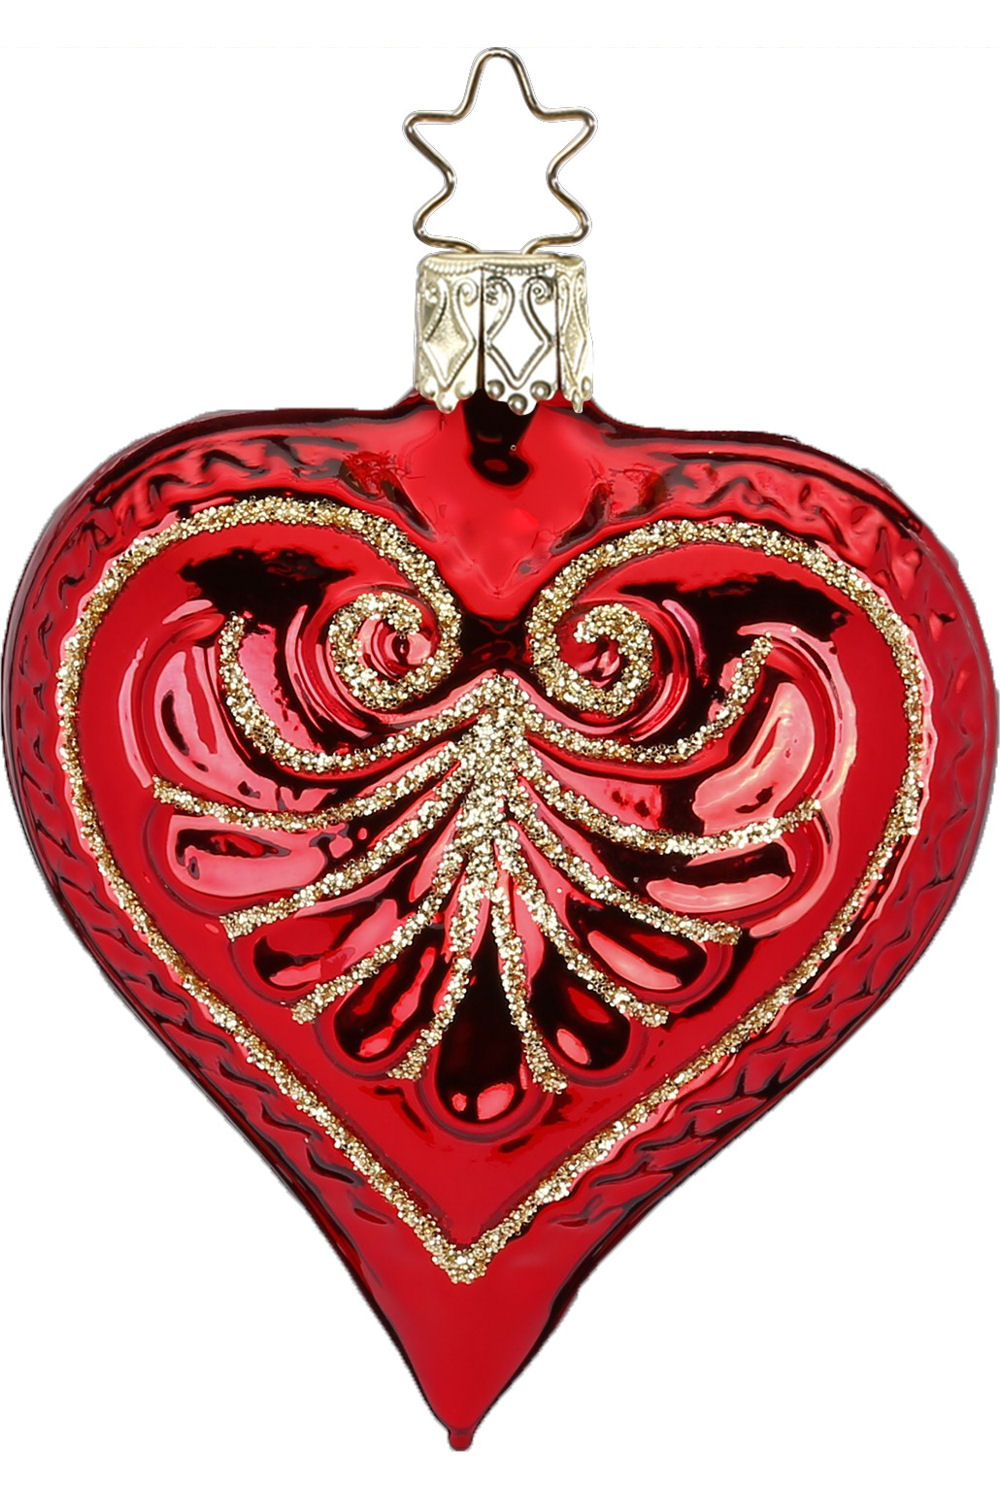 HSHR German Inge Glas 4" XL Light Red Heart handmade Glass Christmas Ornament 